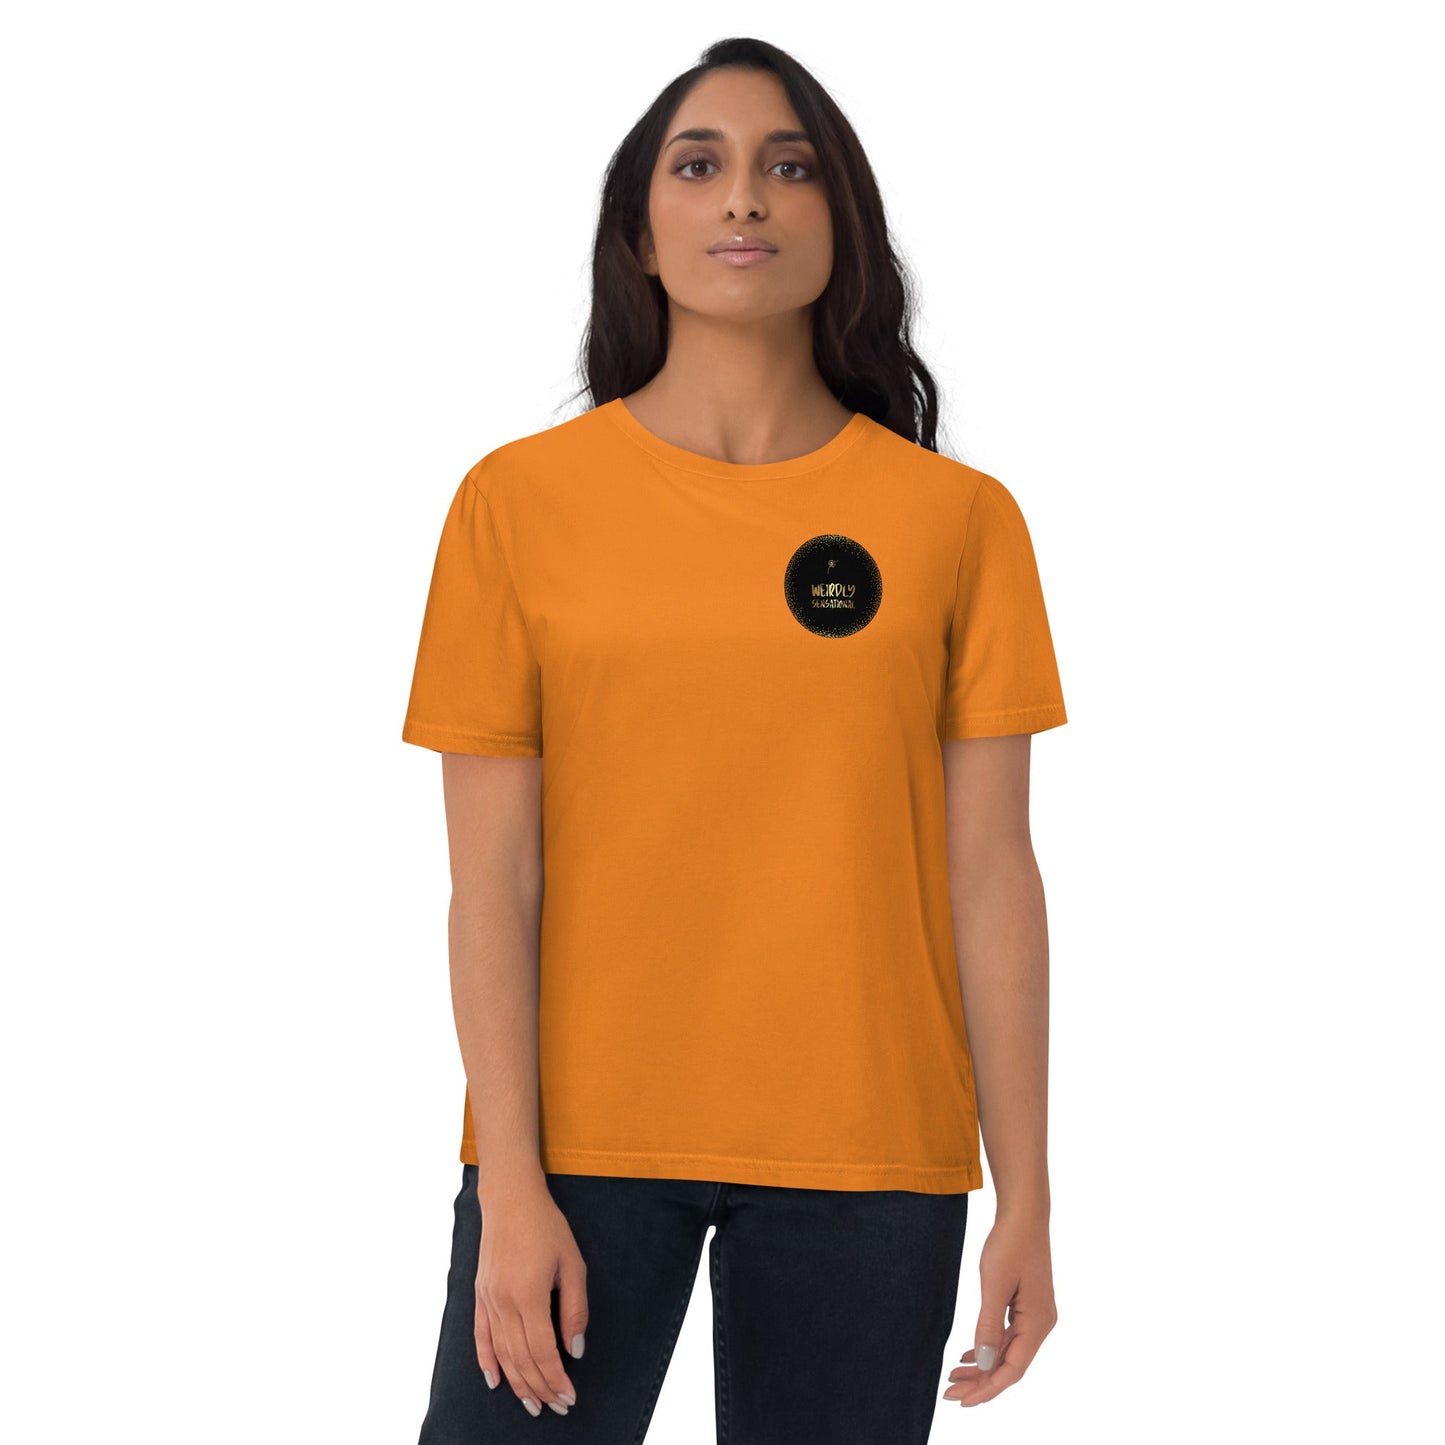 Overthinker Unisex organic cotton t-shirt - Weirdly Sensational